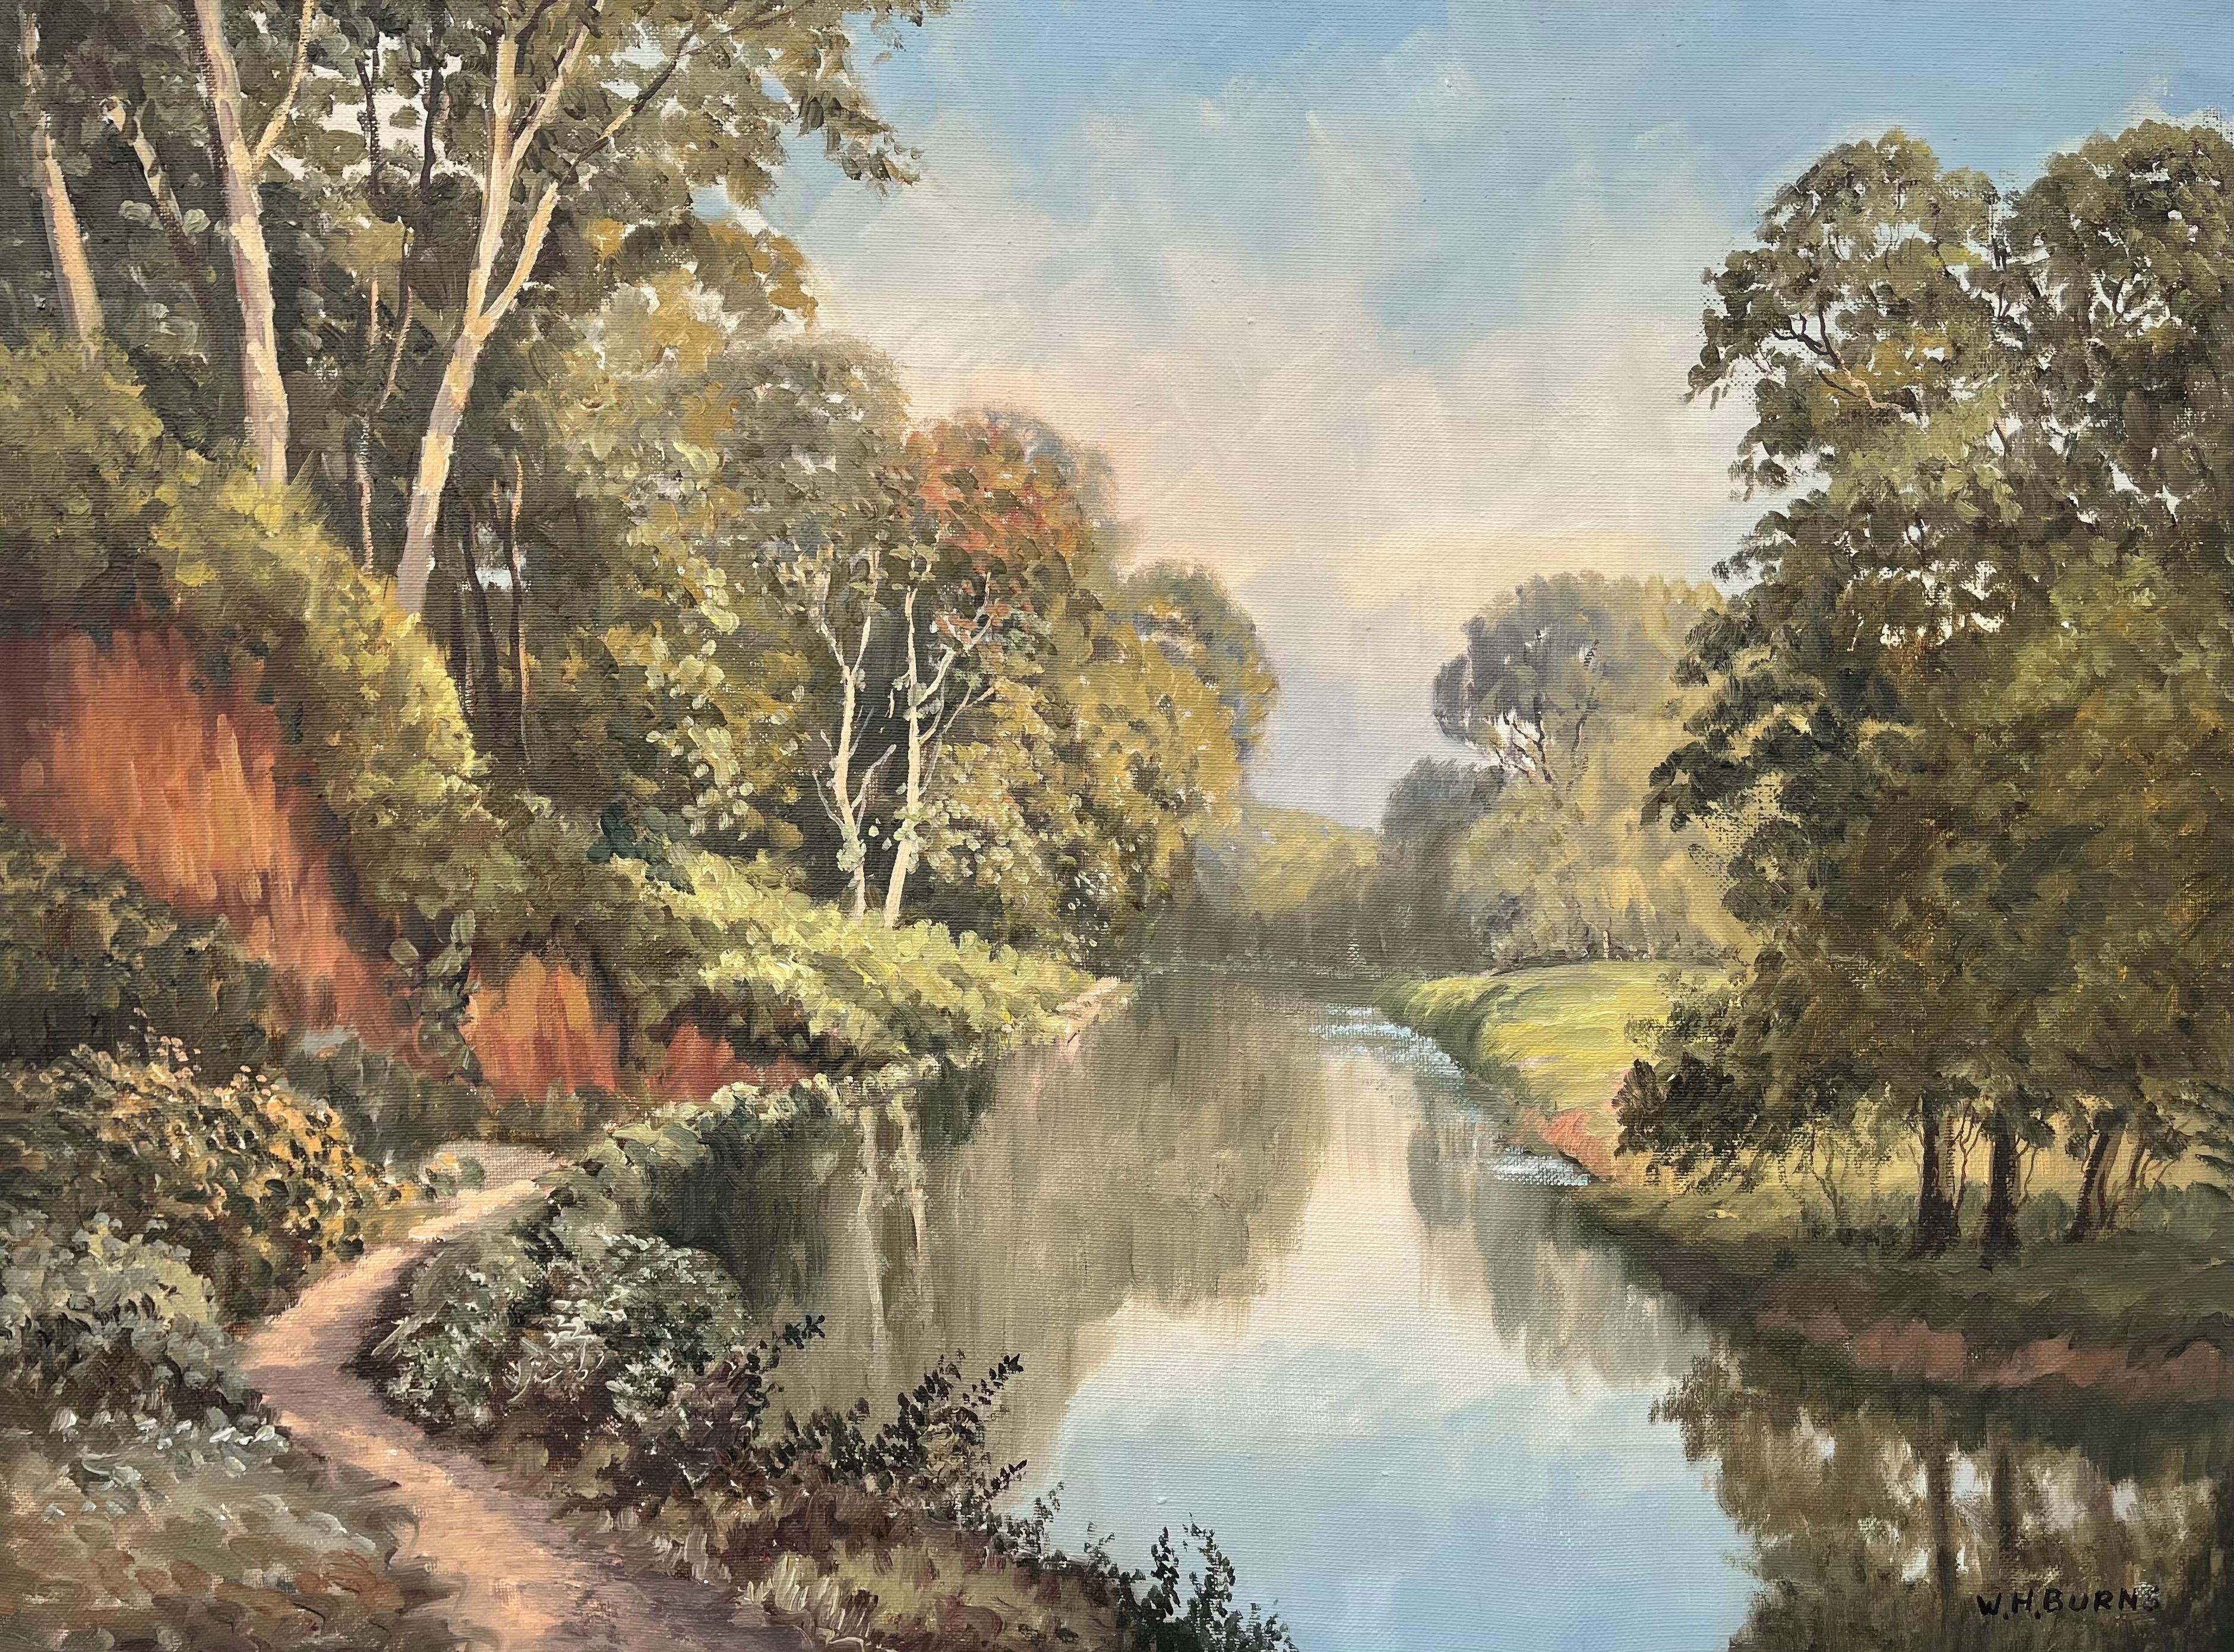 Painting of Idyllic River Scene On the Lagan in Ireland by Modern Irish Artist  For Sale 3